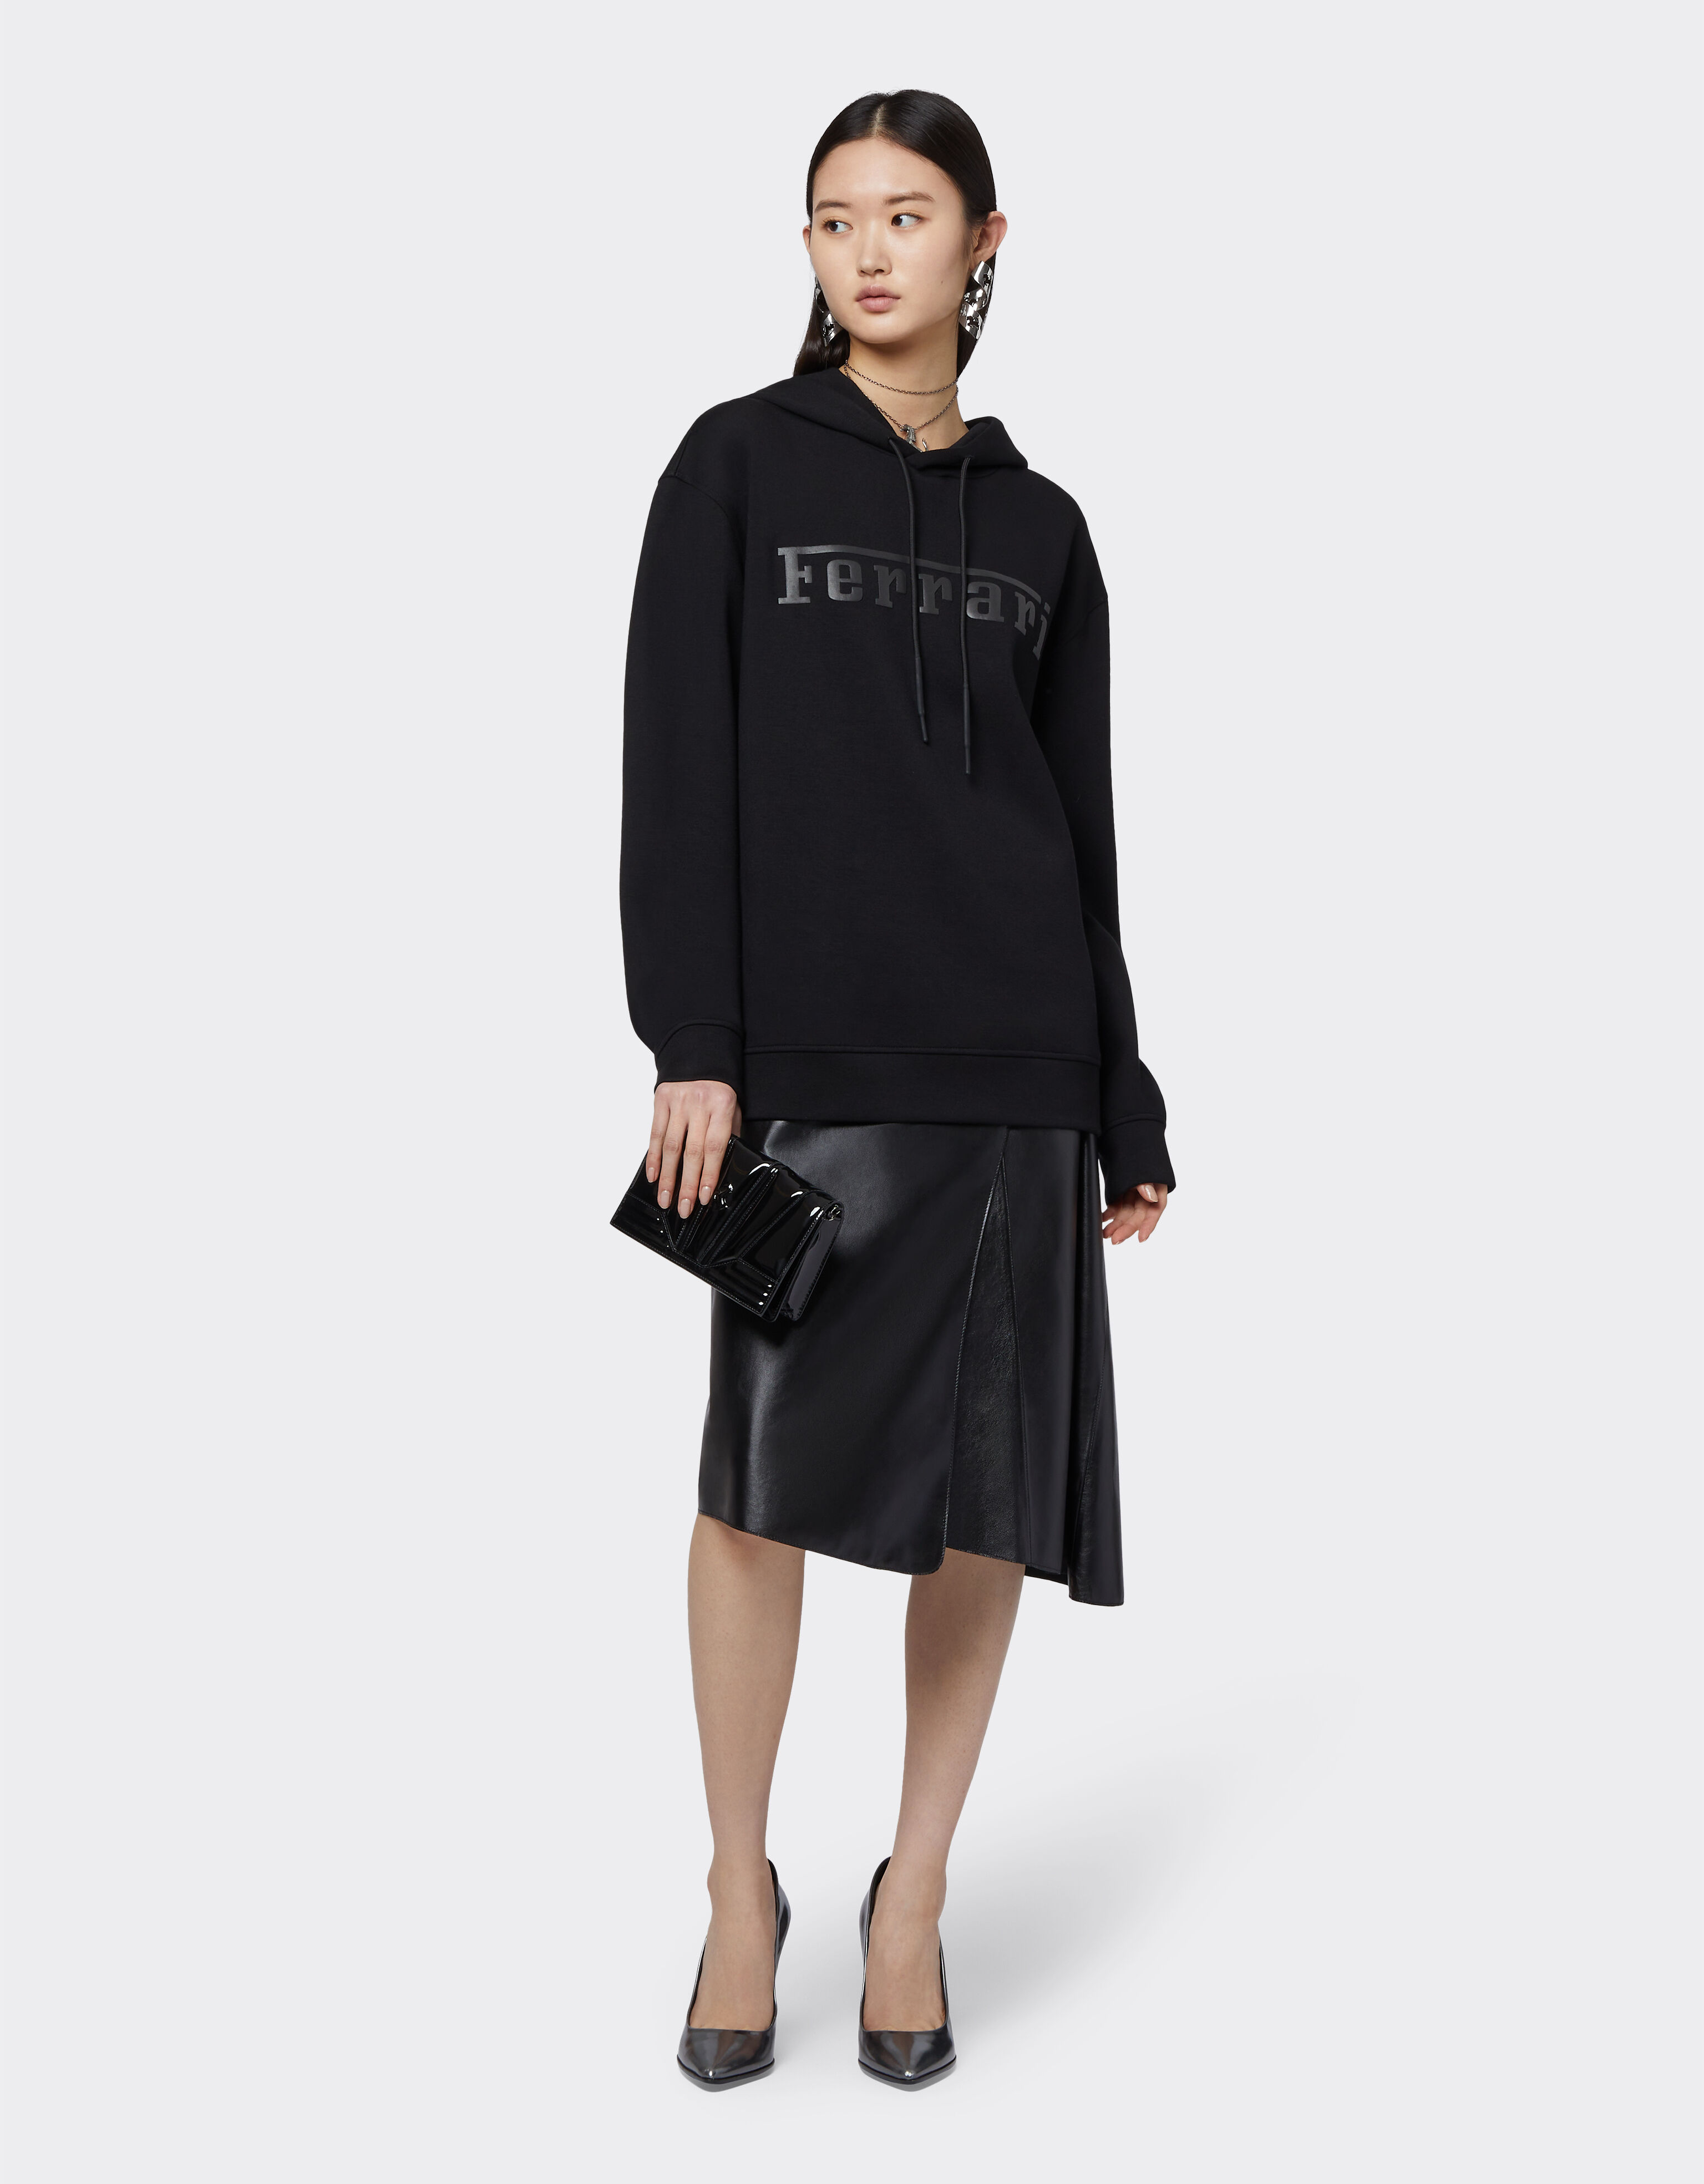 Ferrari Sweatshirt in scuba fabric with metal embroidery and Ferrari logo Black 48118f